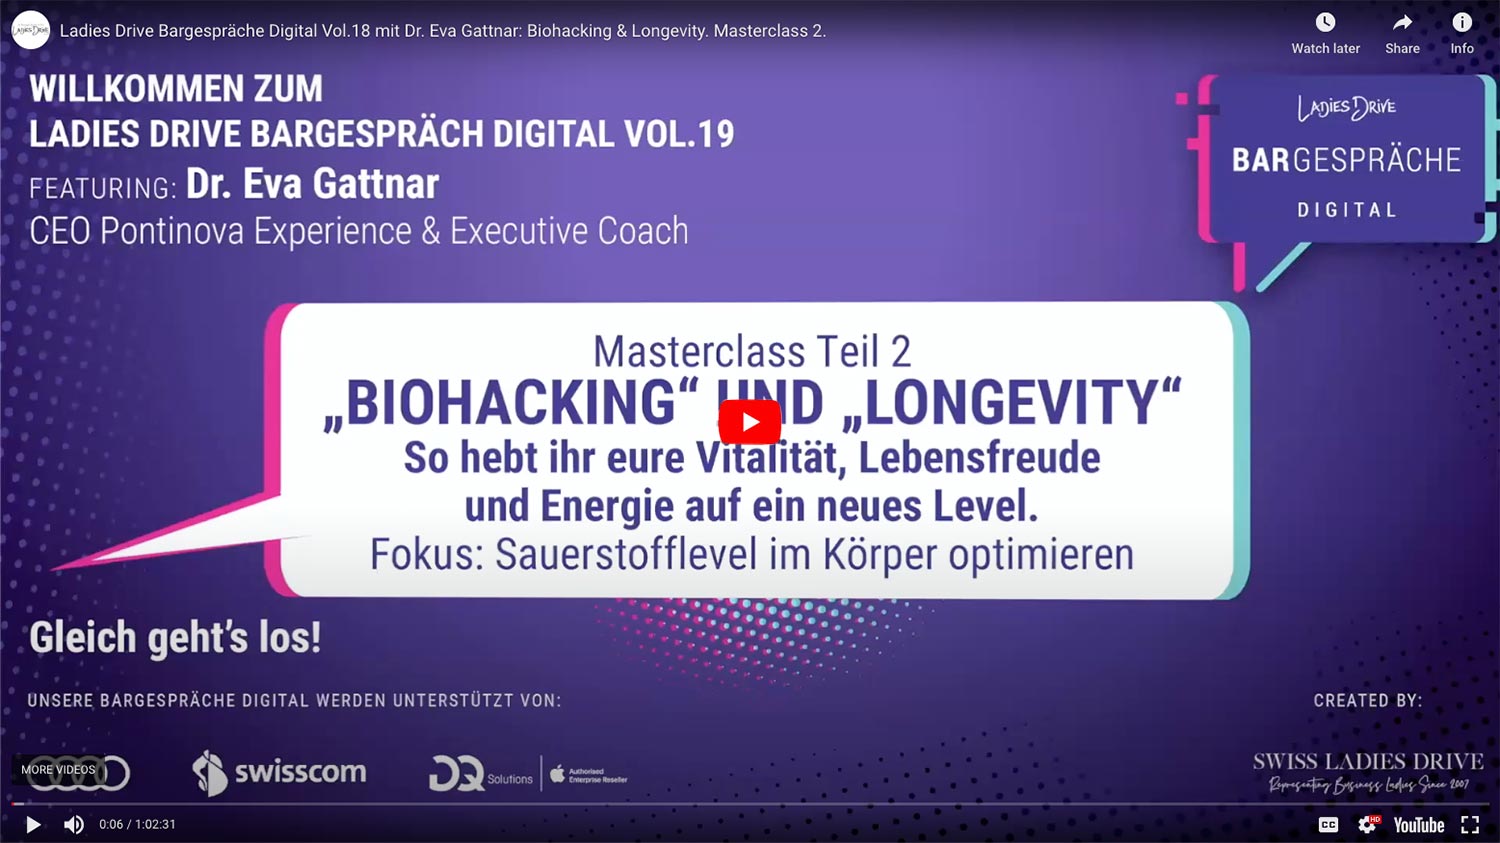 VIDEO – Bargespräche Digital Vol.19 mit Dr. Eva Gattnar: Biohacking & Longevity. Masterclass 2.